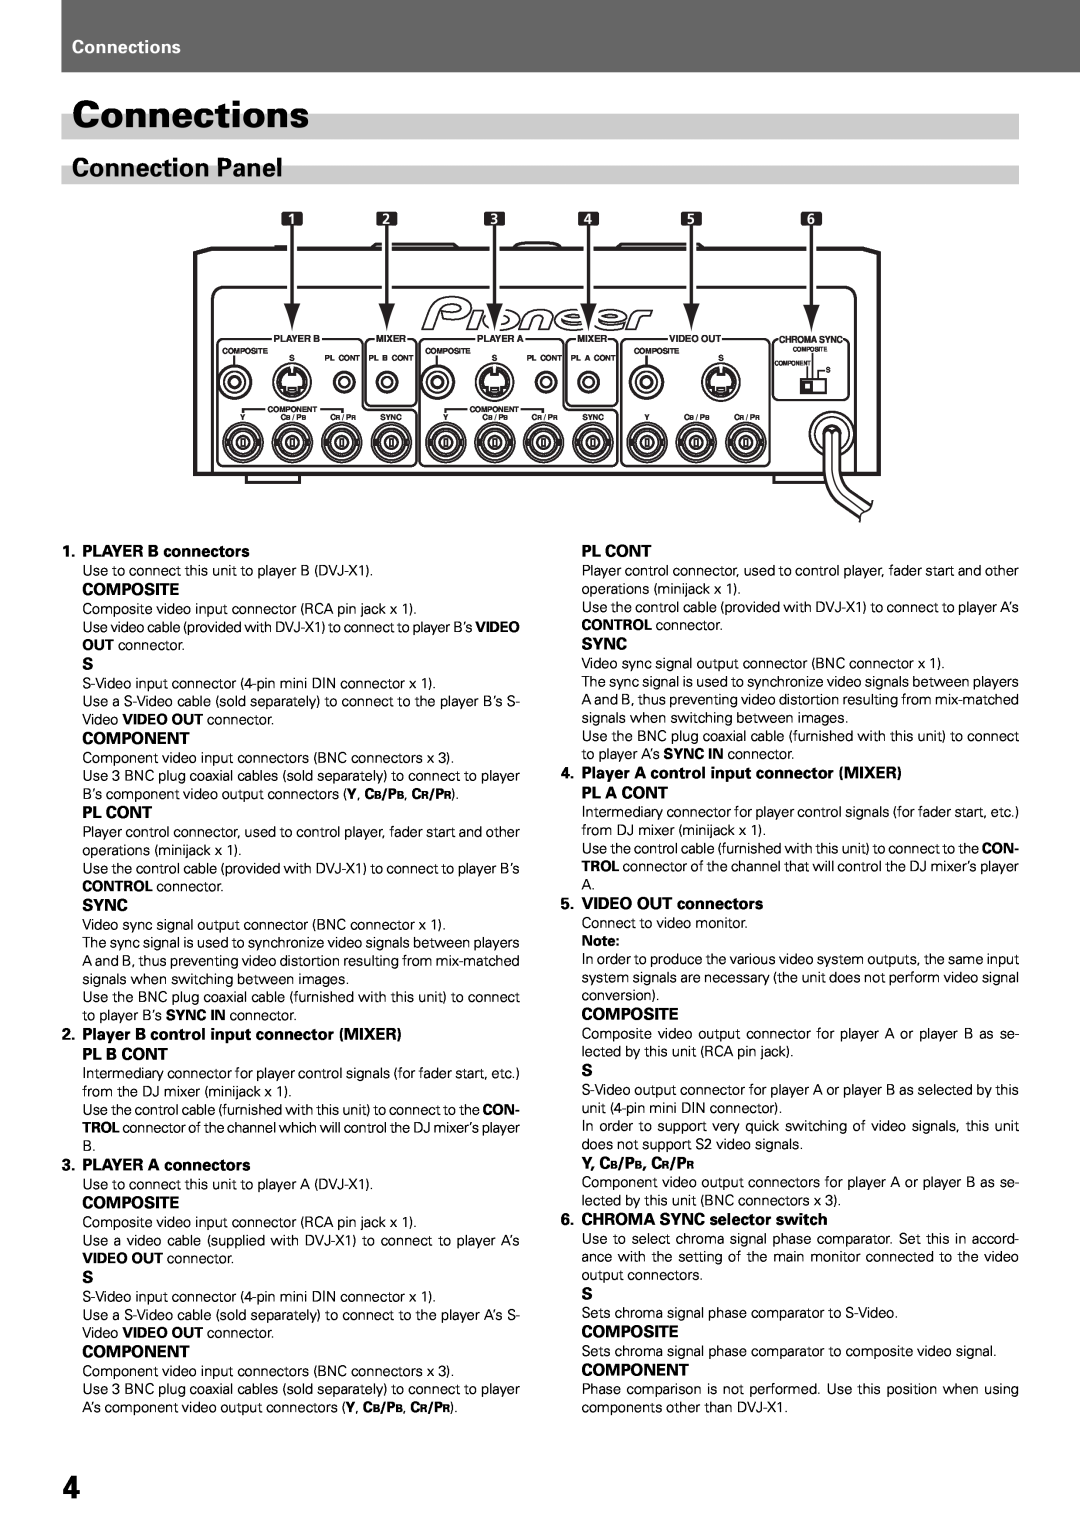 Pioneer VSW-1 2 manual Connections, Connection Panel, PLAYER B connectors, Composite, Component, Pl Cont, Sync, Pl A Cont 